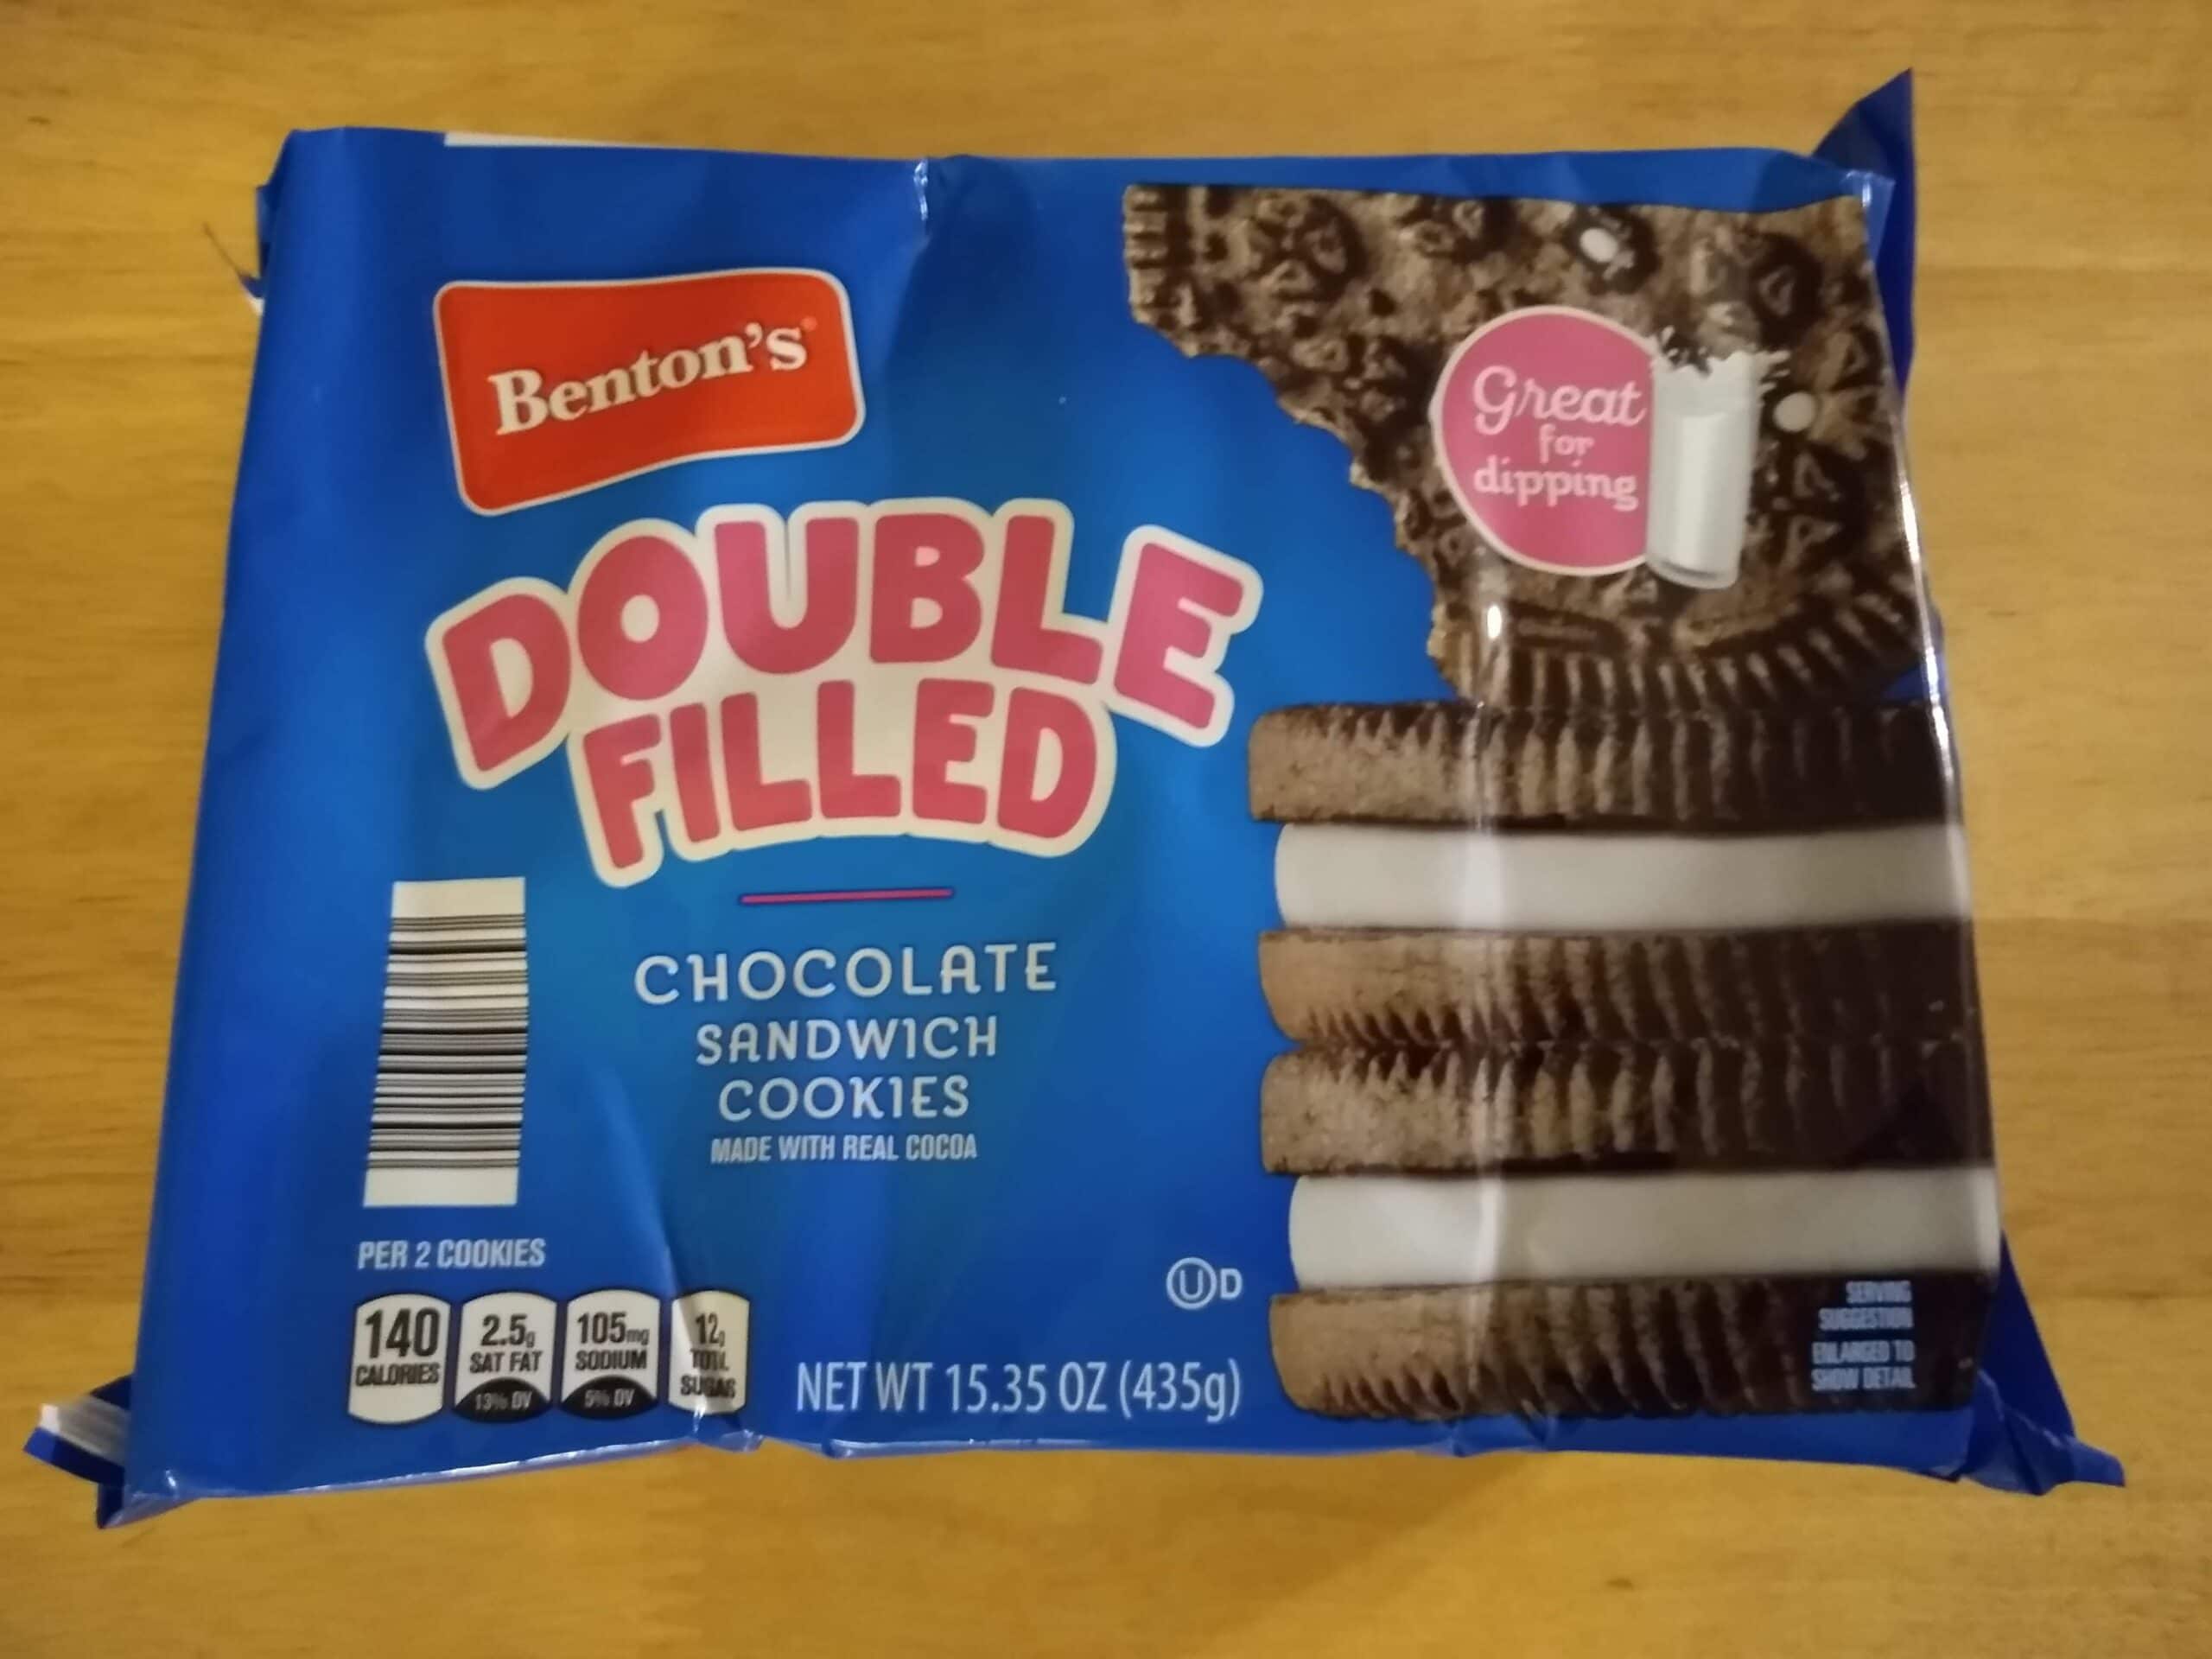 Bentons-Double-Filled-Chocolate-Sandwich-Cookies.jpg